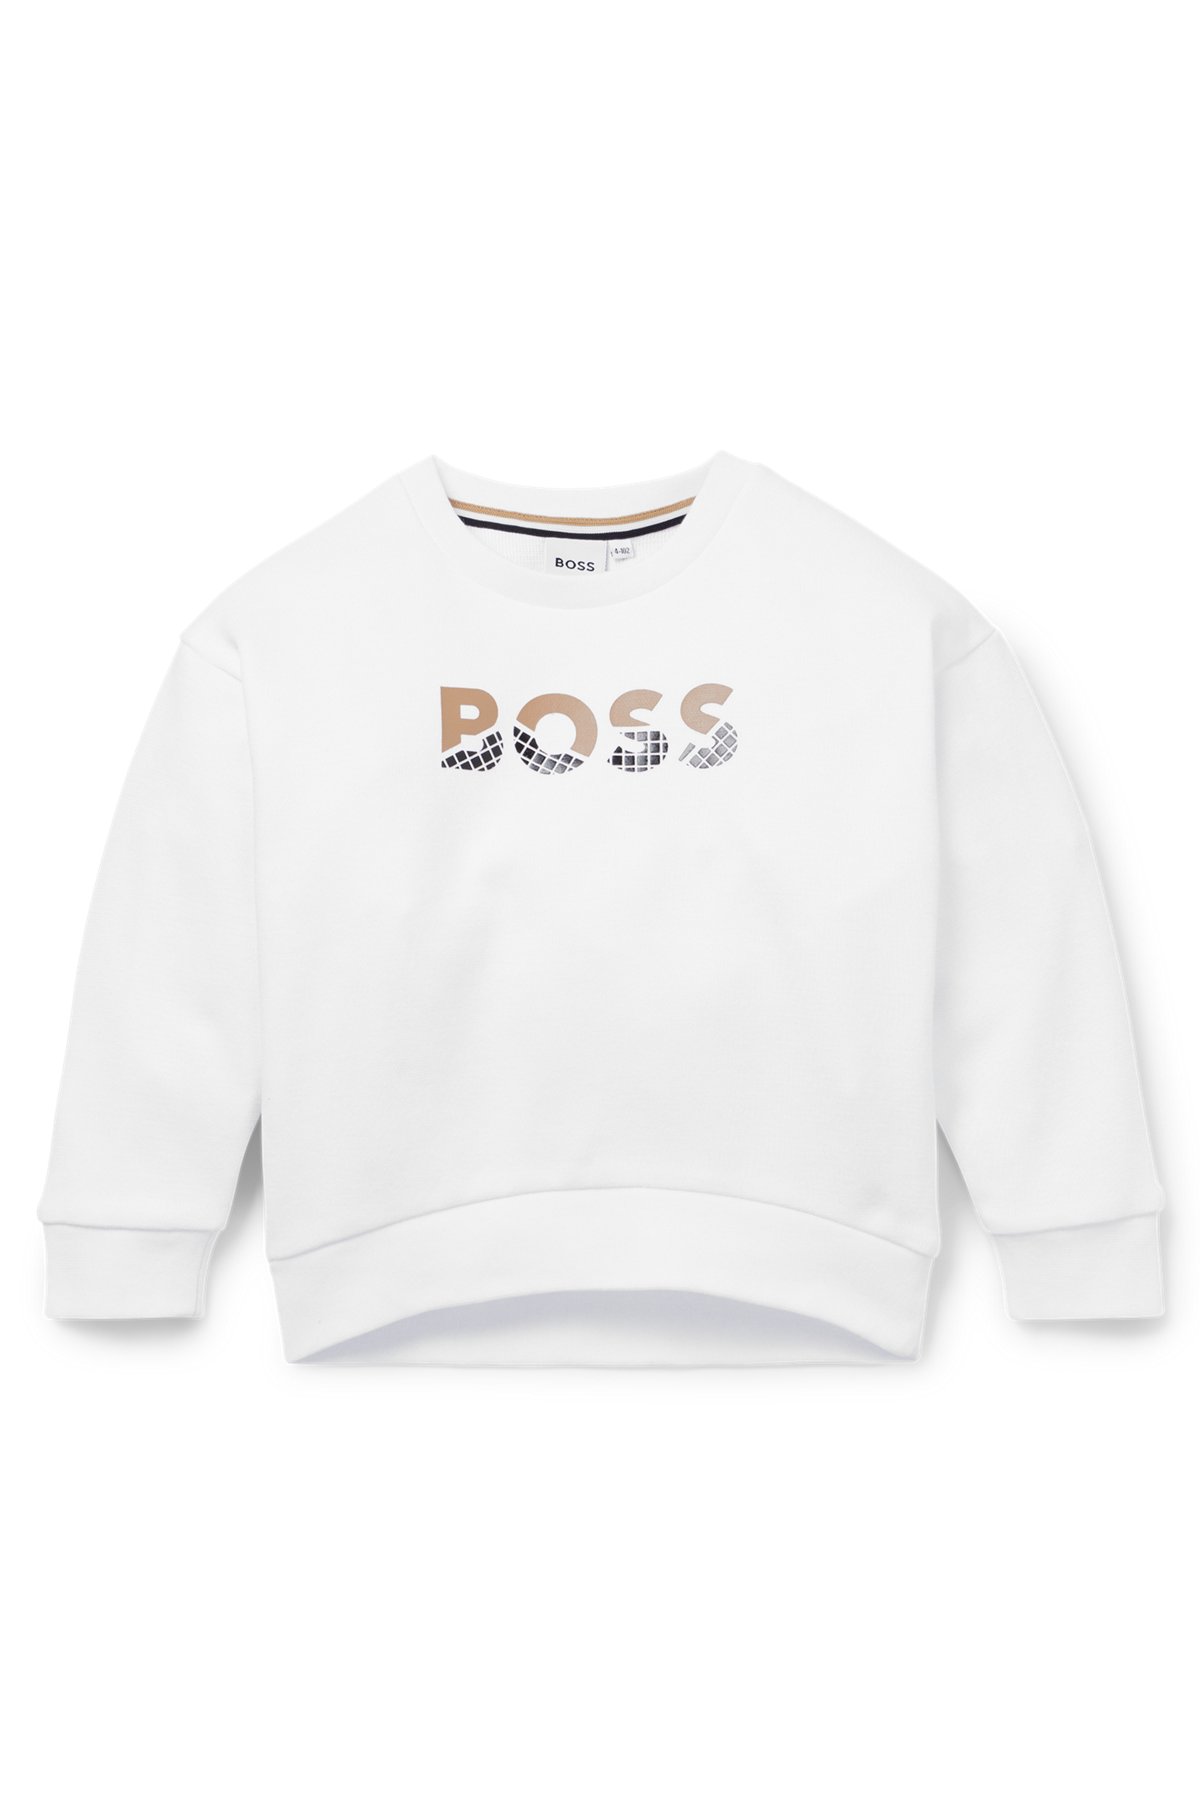 Kids' sweatshirt in cotton with logo print, White